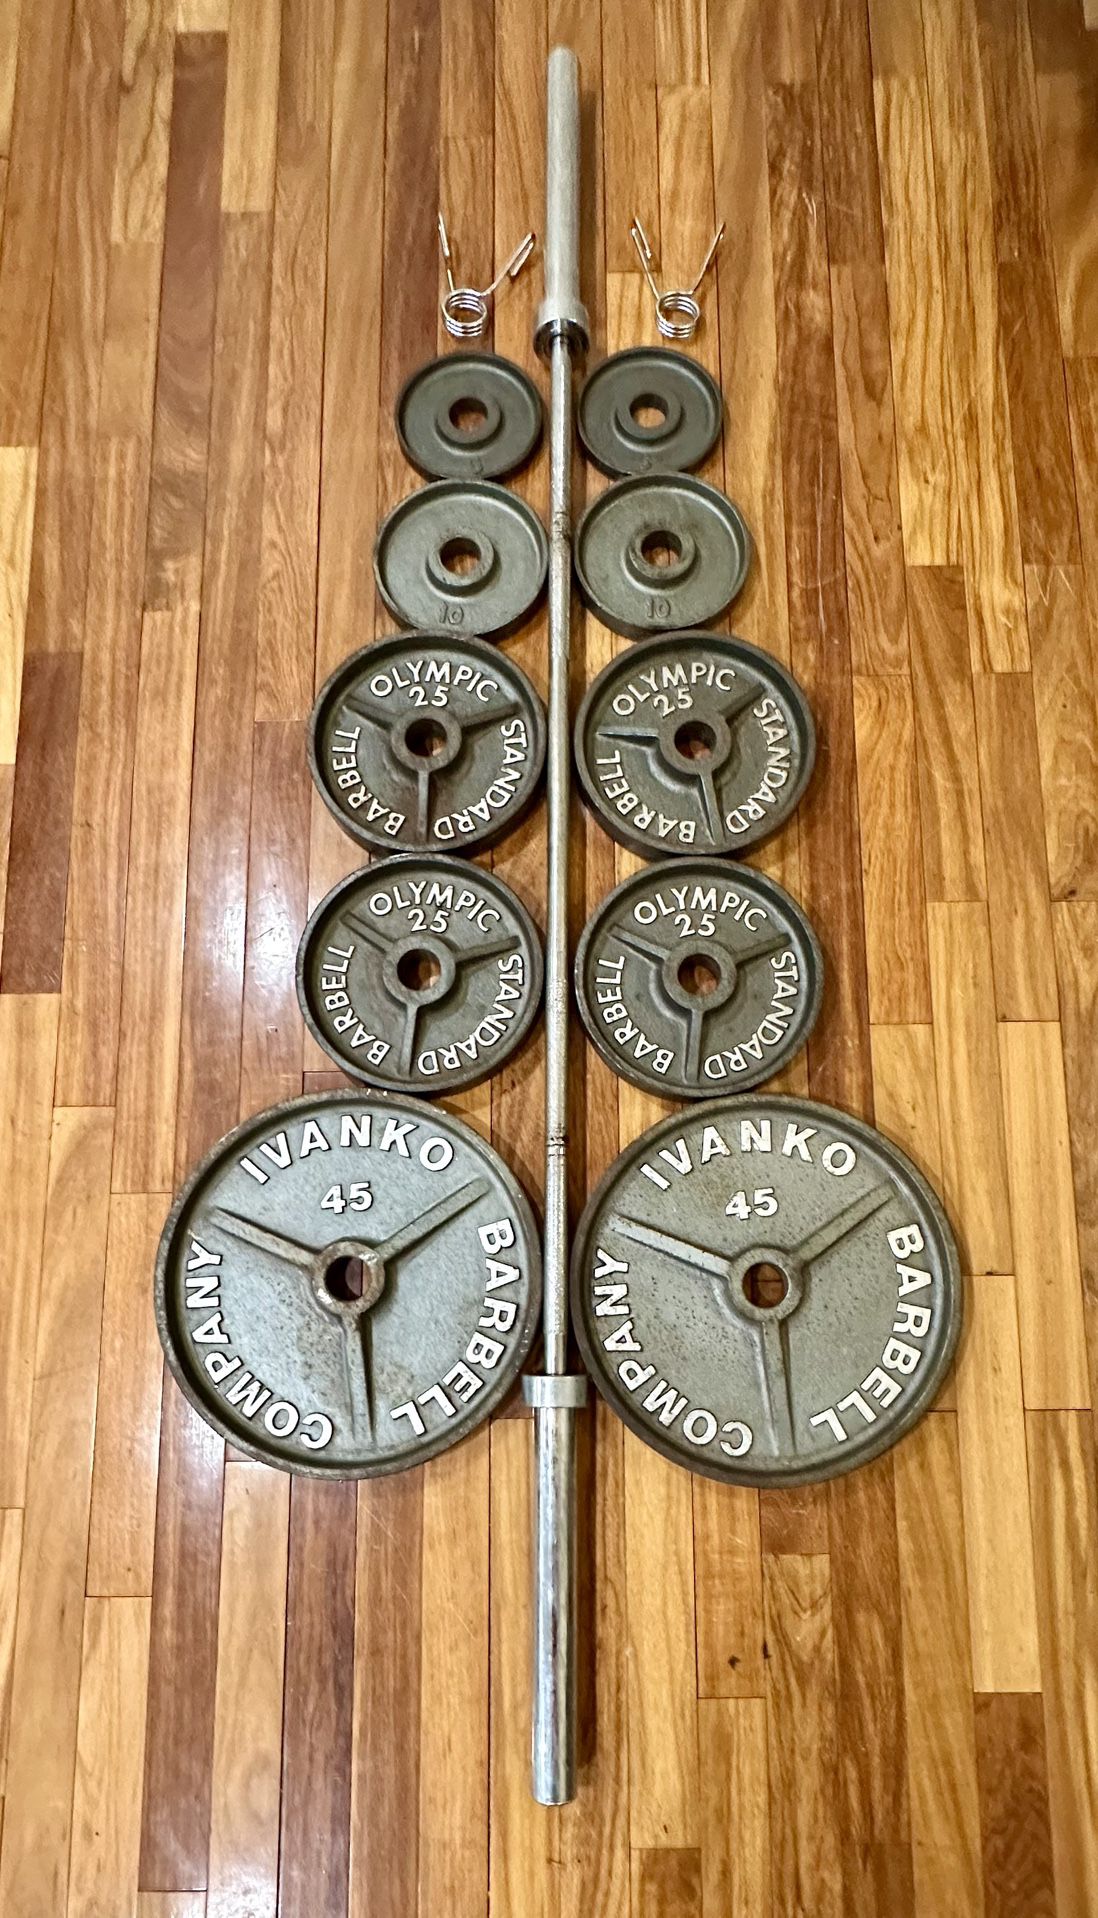 Ivanko Olympic Weight Set (265lbs) 